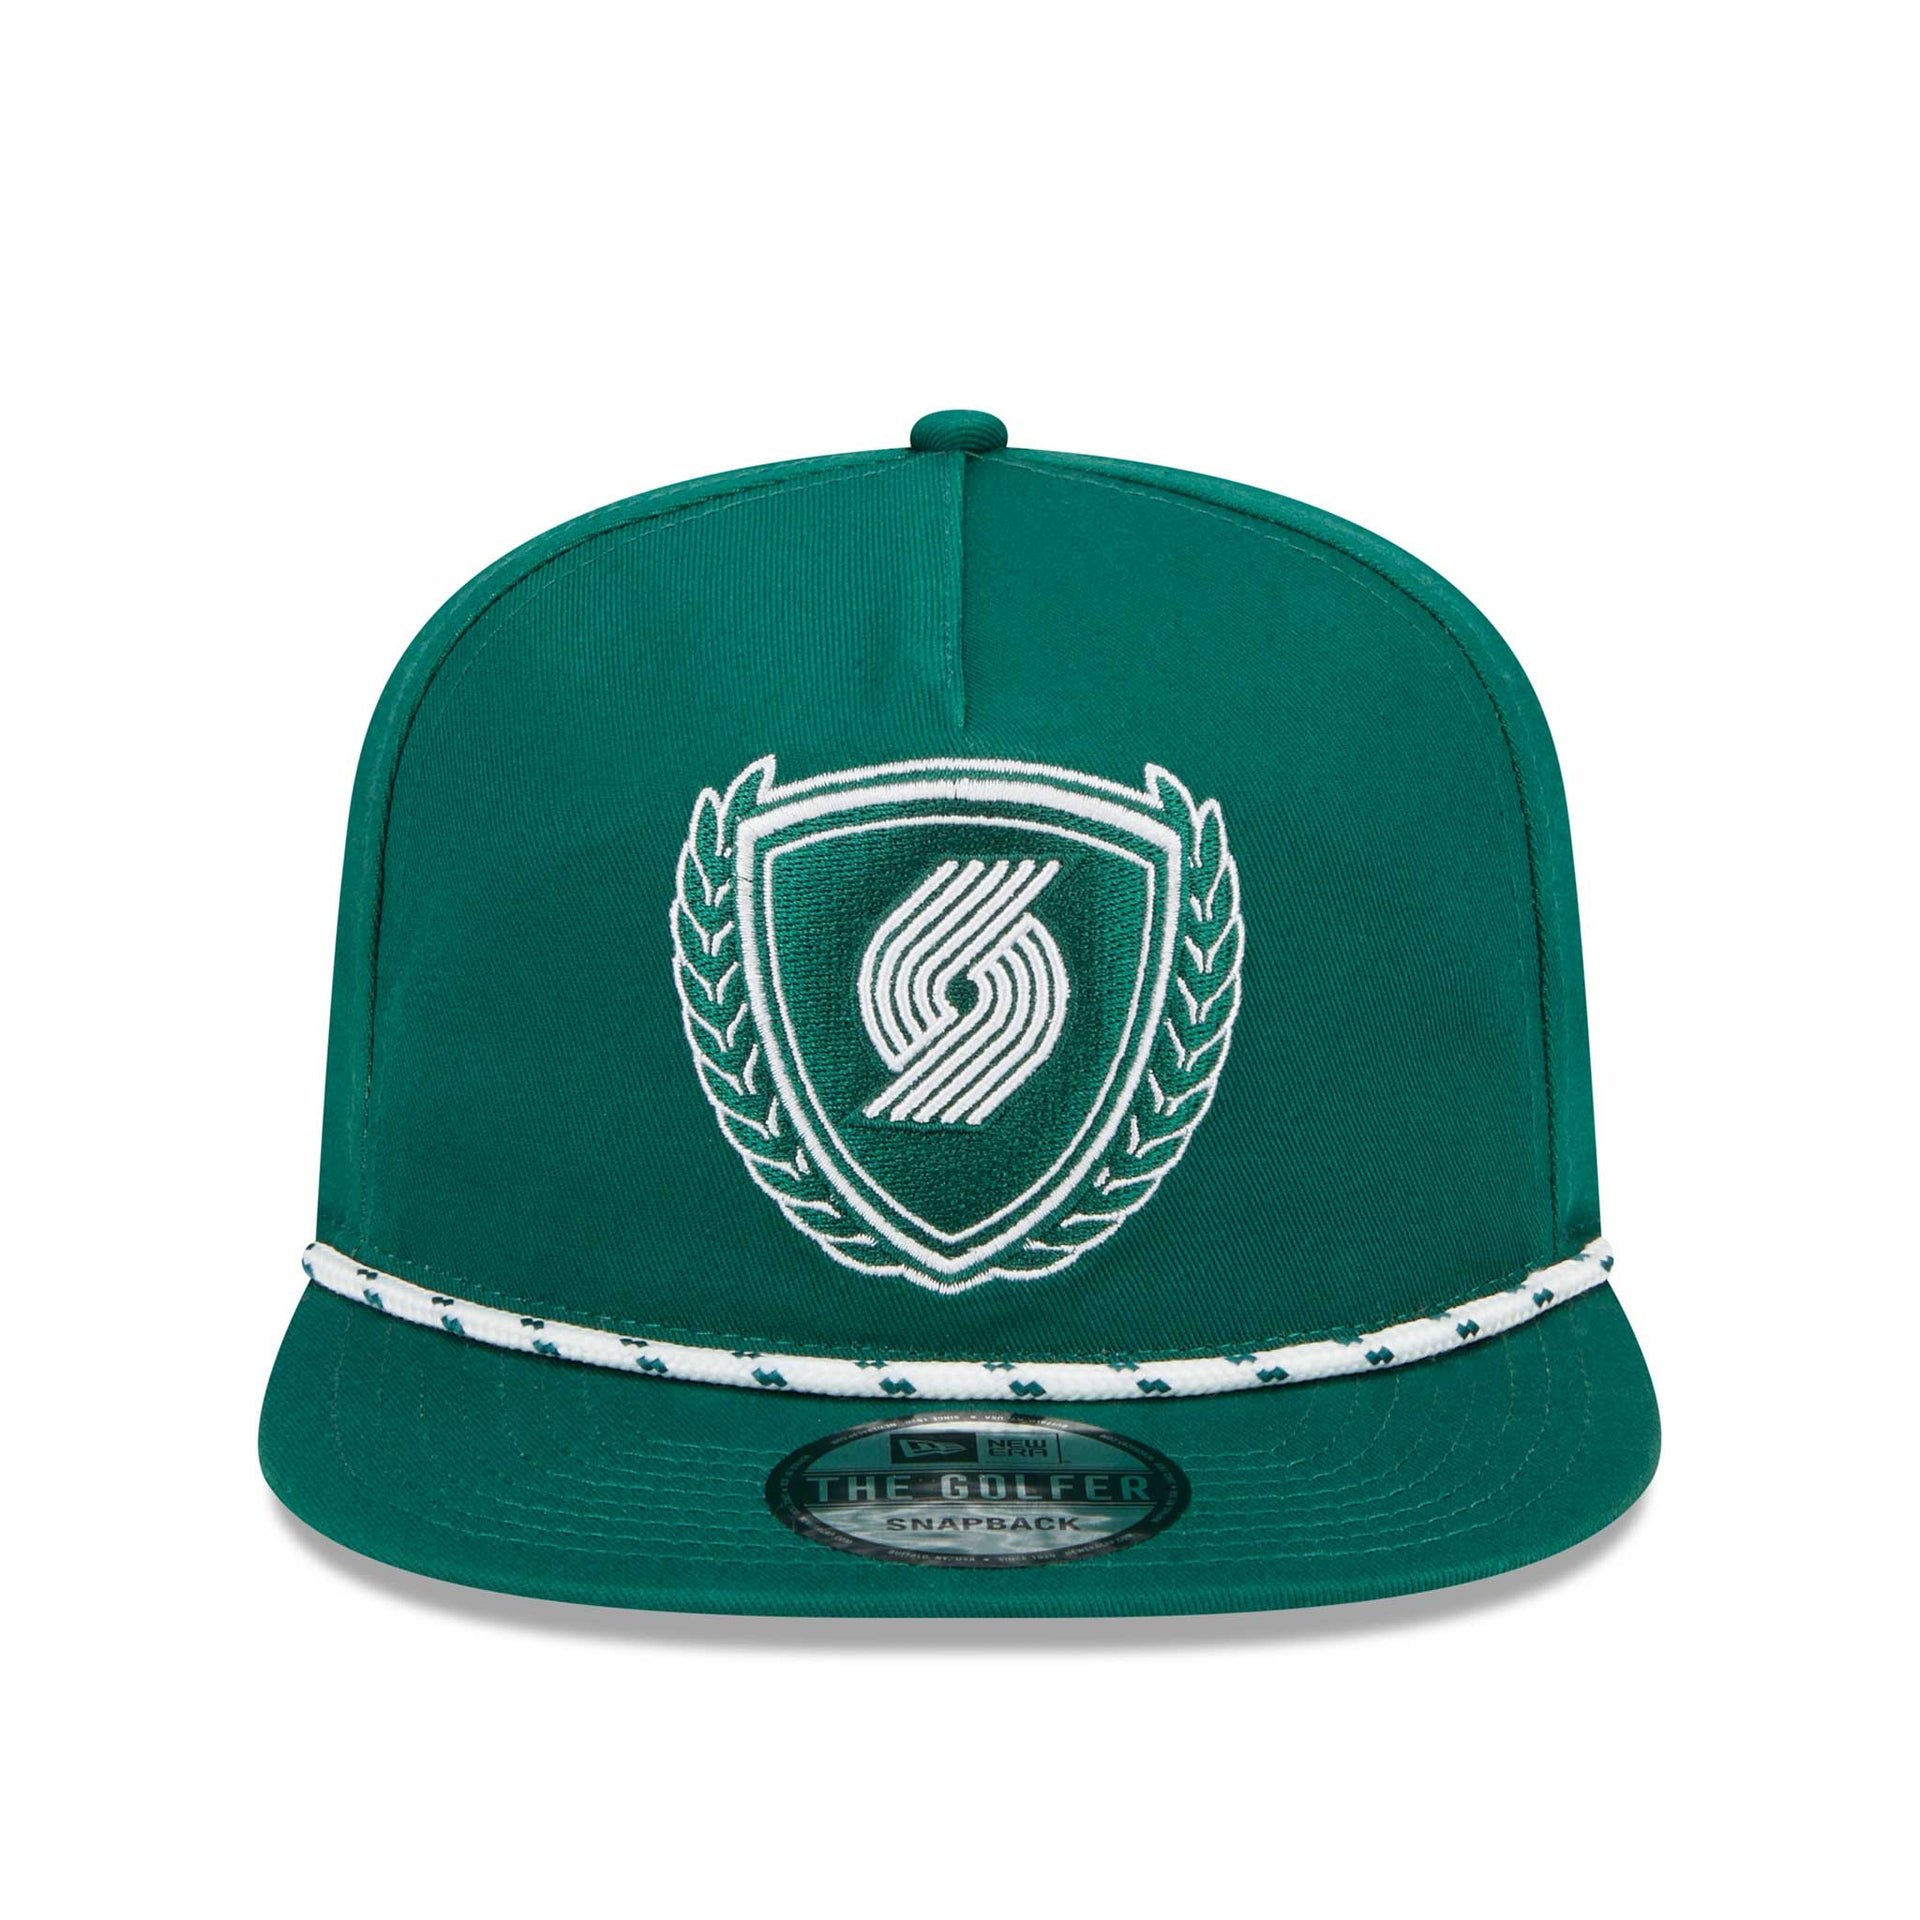 New Era New York Yankees Exclusive Selection 9FIFTY Snapback Adjustable Hat Cap- OSFM (Black Crown White Logo)